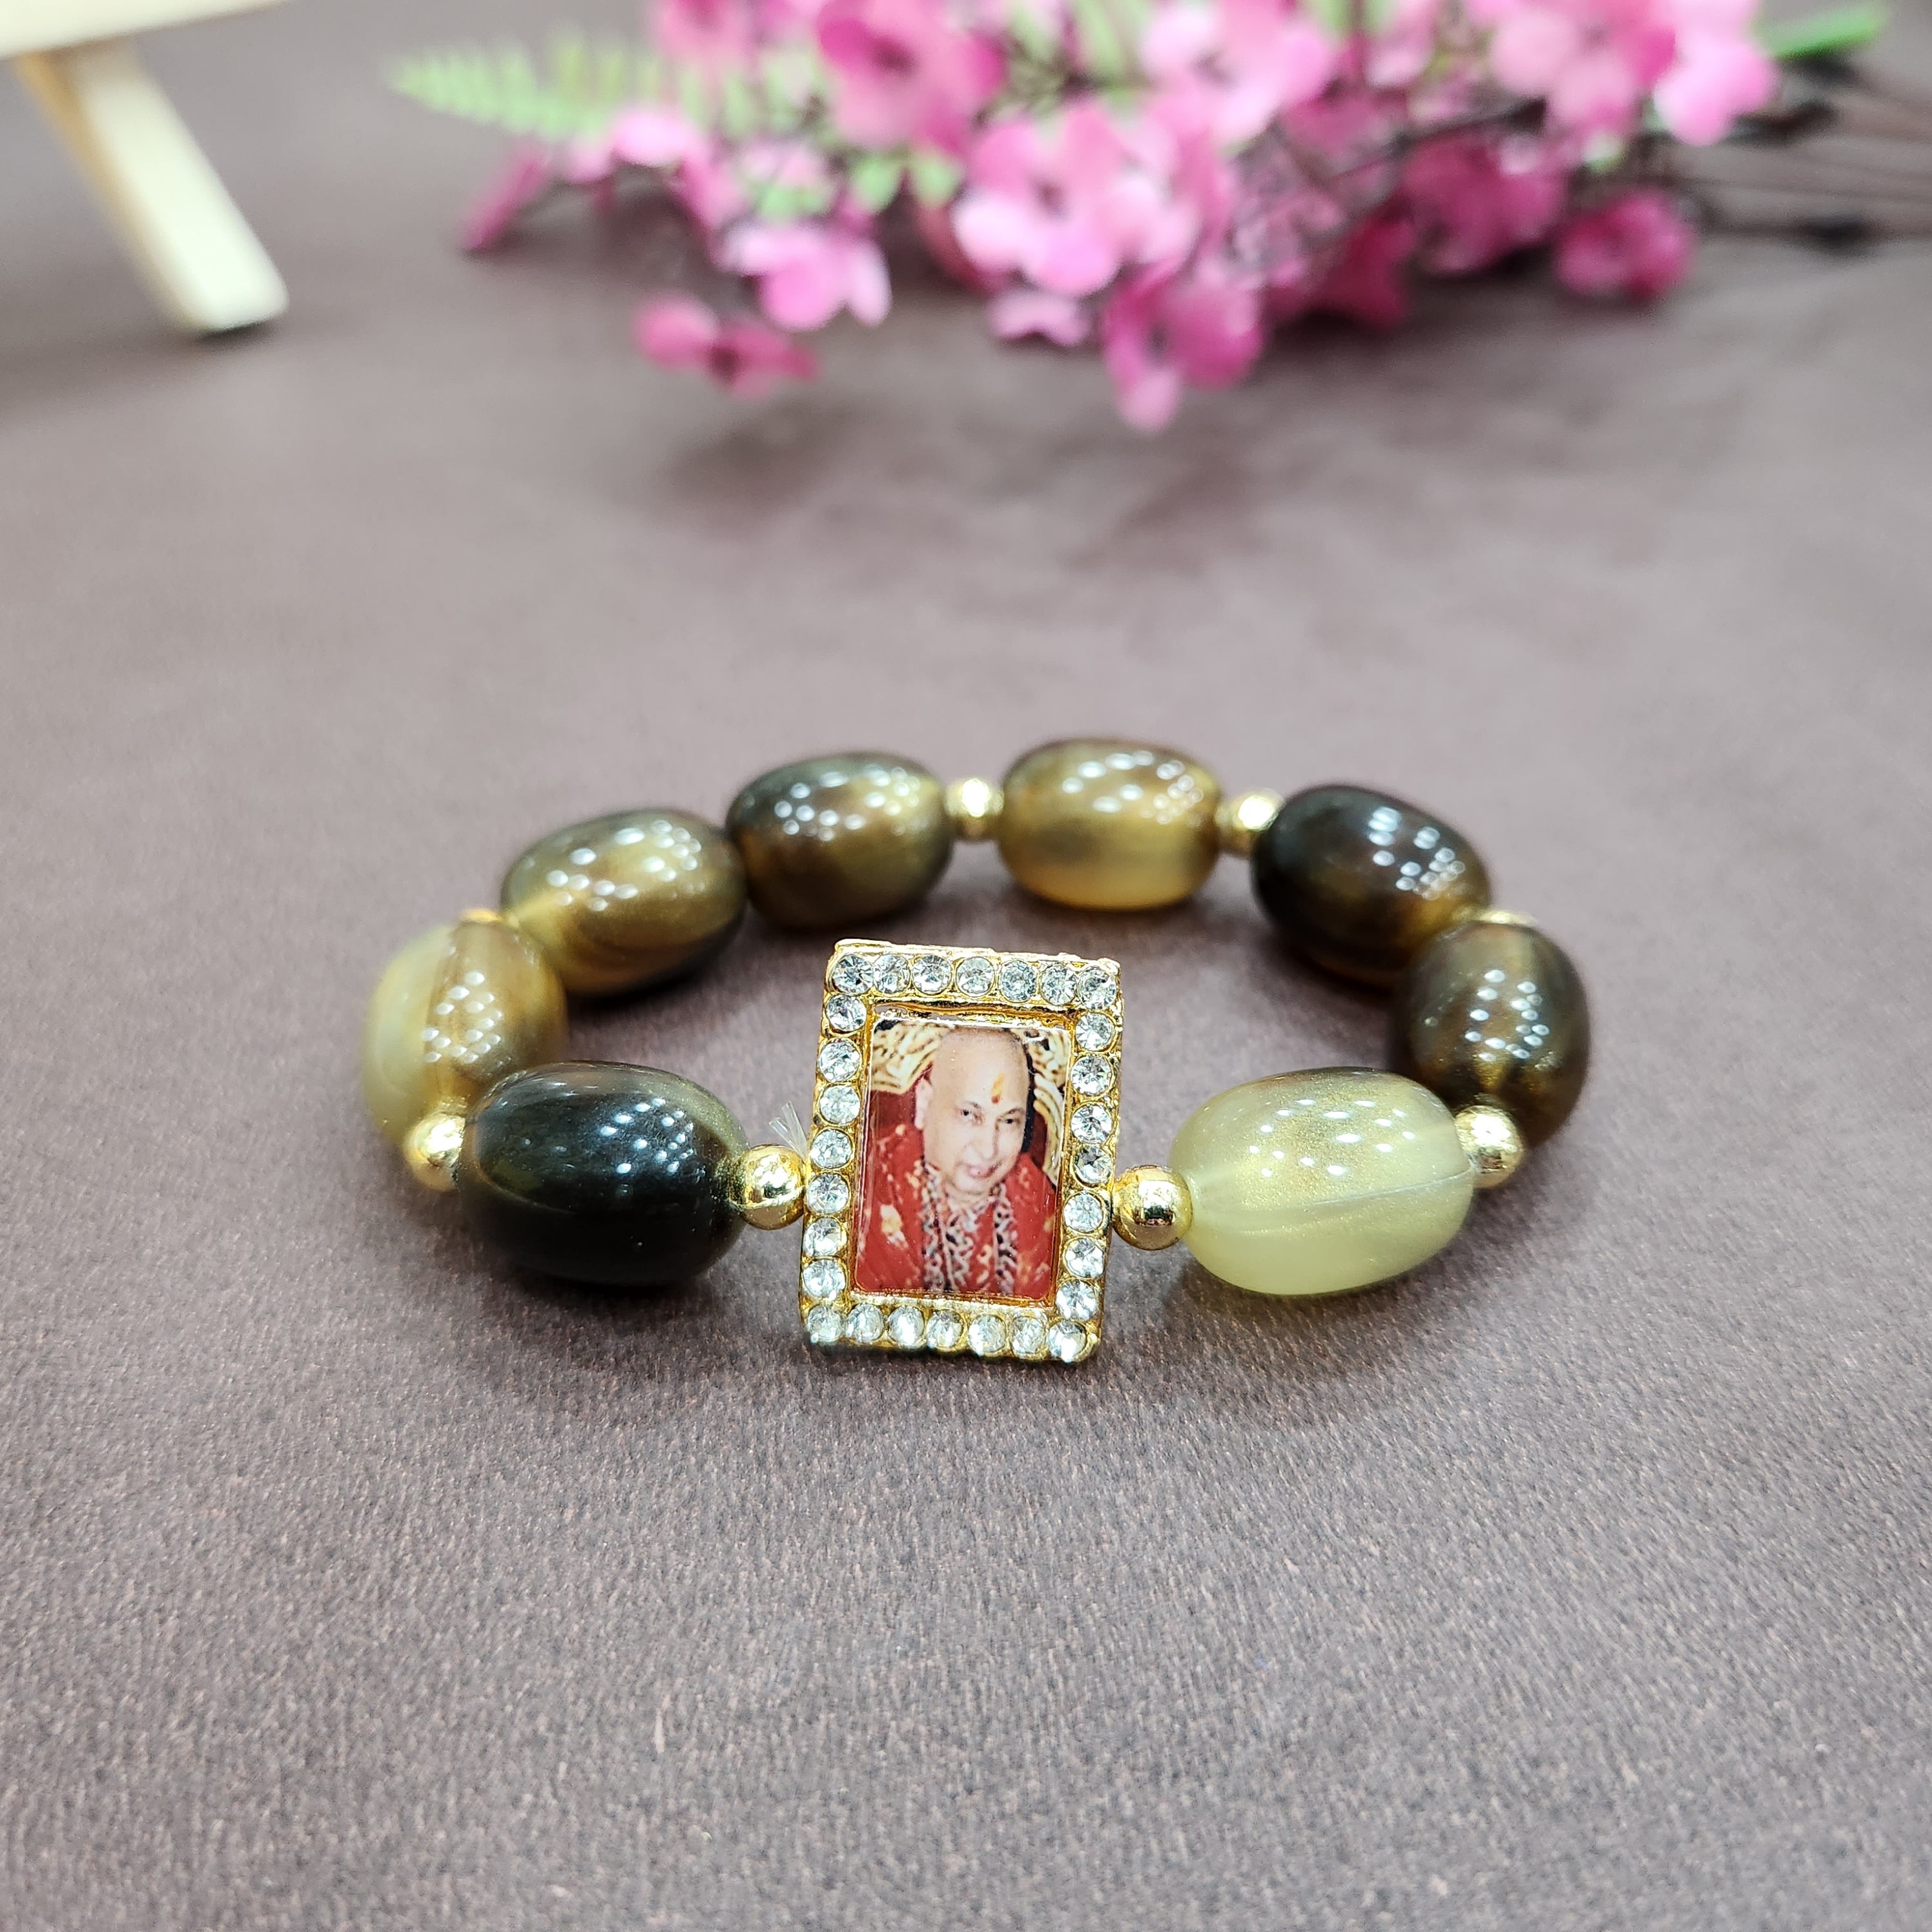 Buy Jai Guru Ji |Positive Silver Sea Stone Bracelet with Jai Guruji Swaroop  at Amazon.in